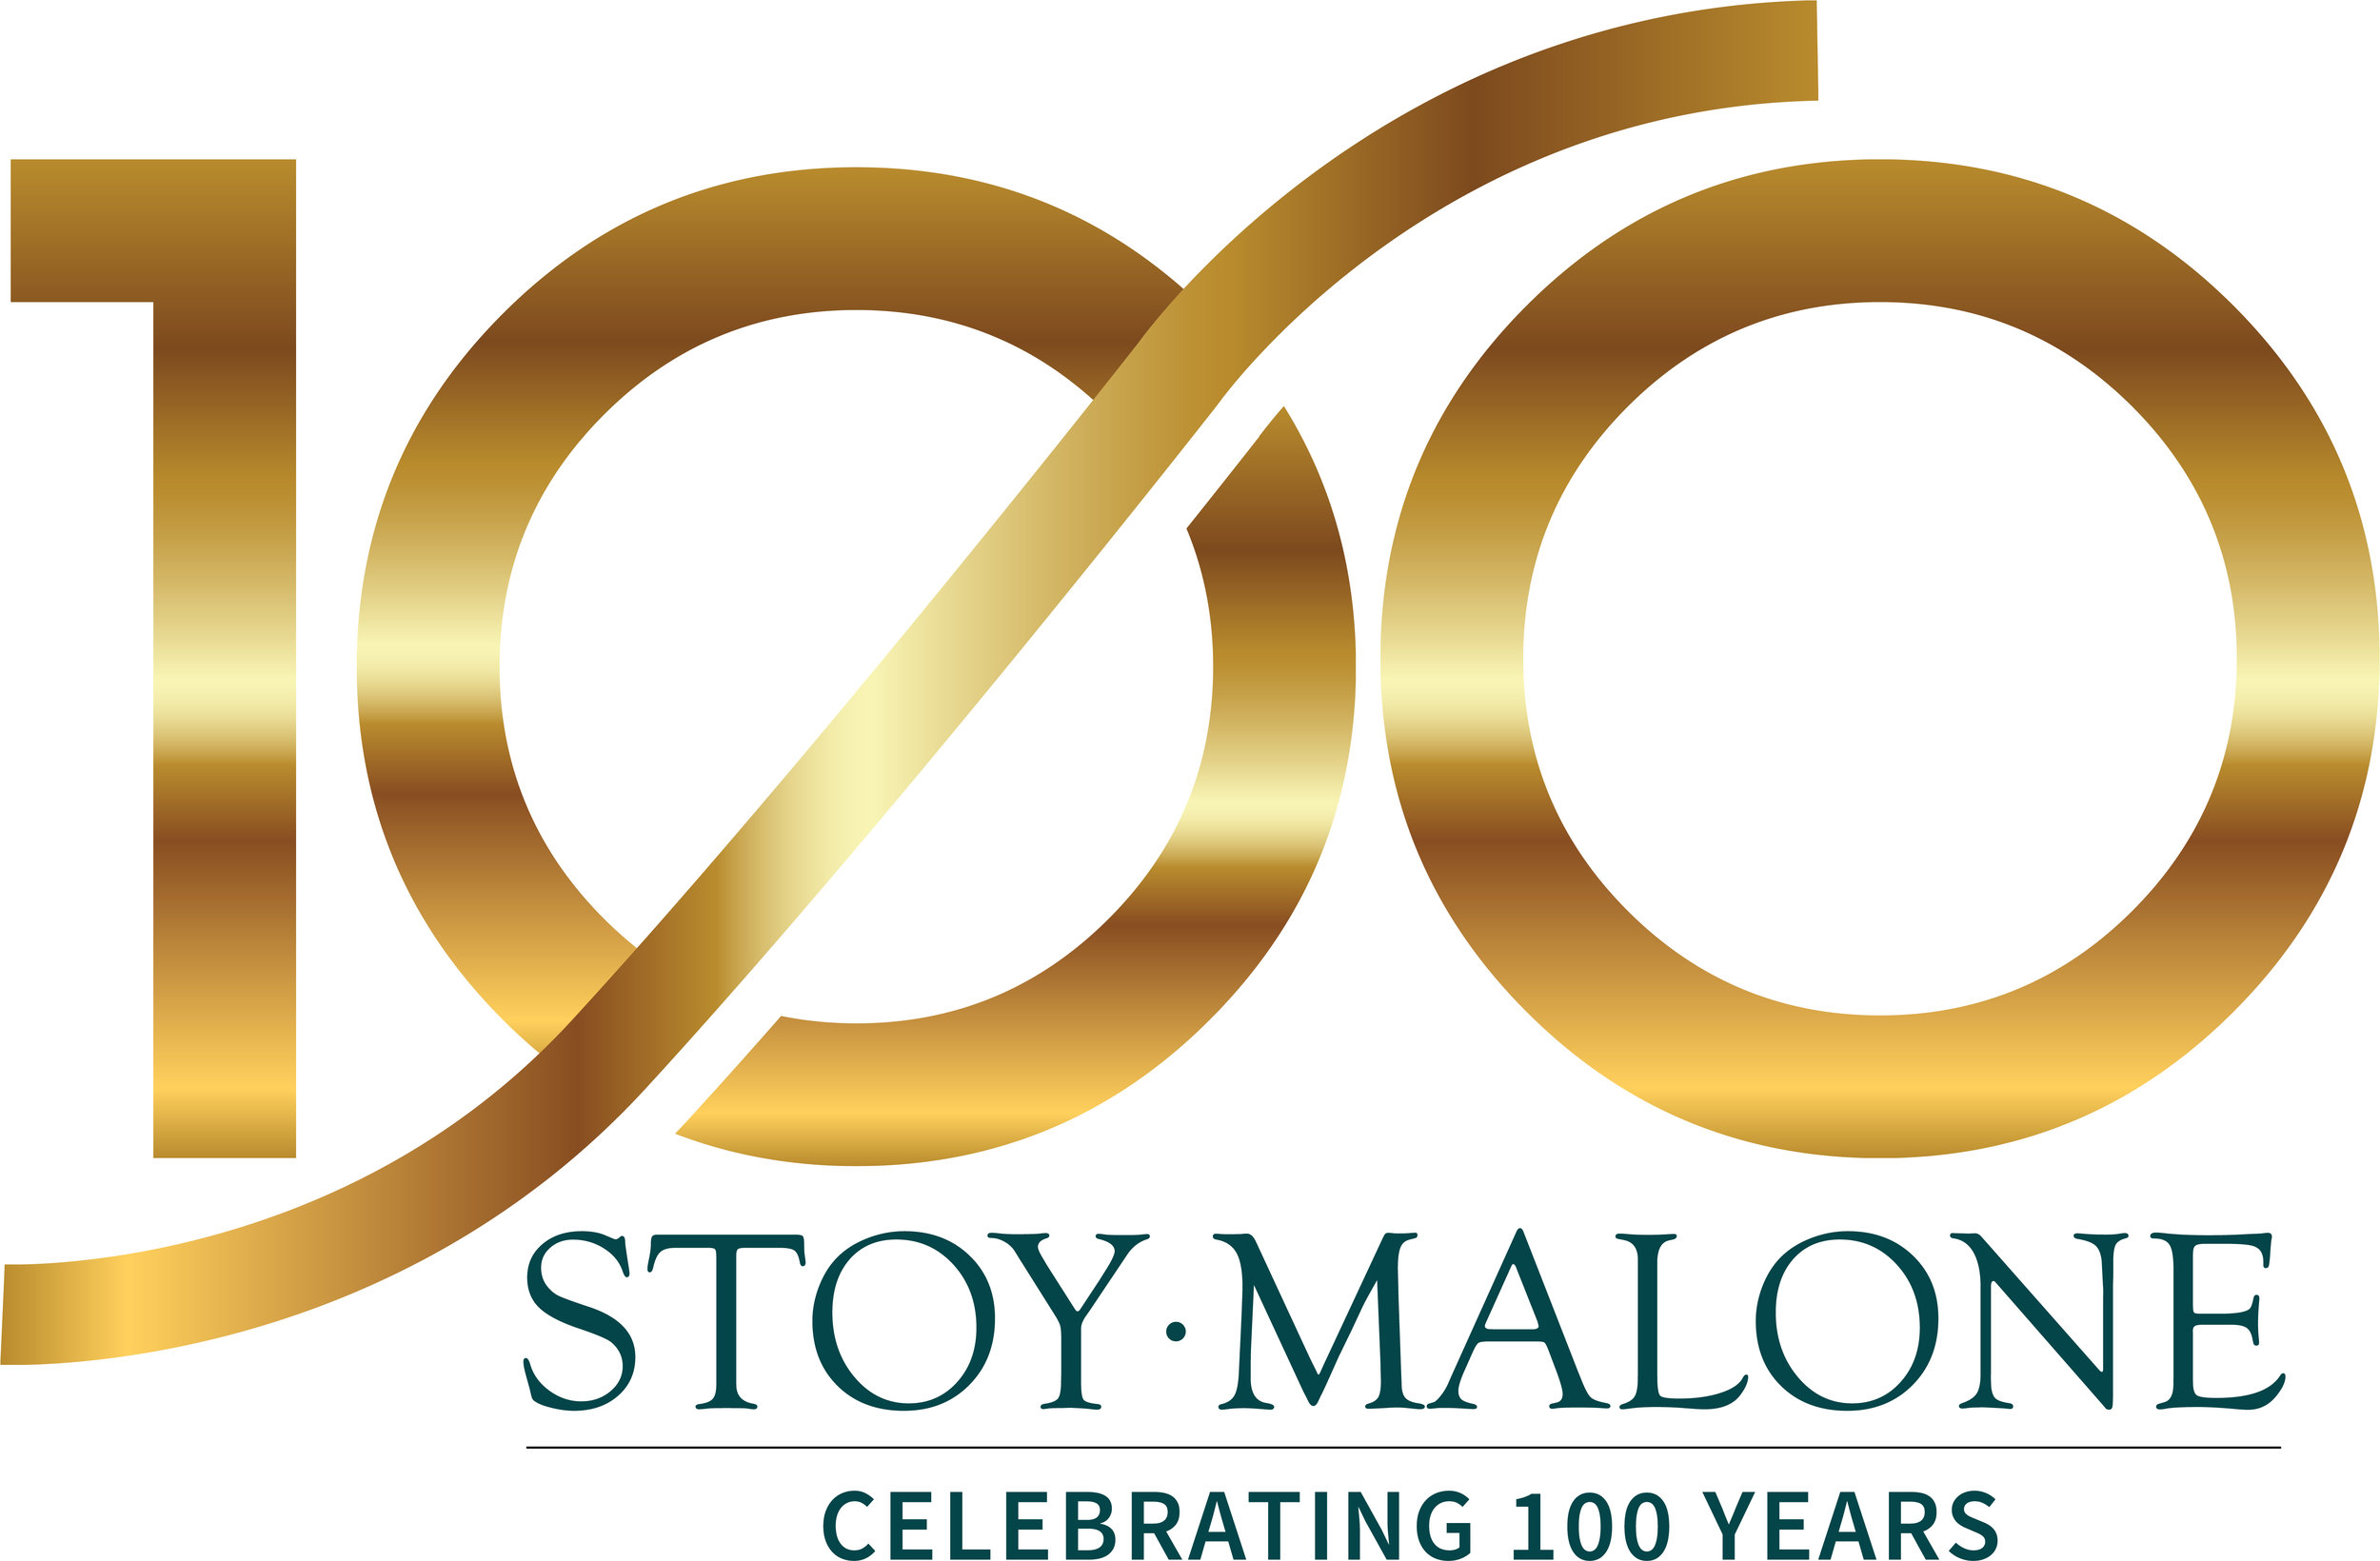 Stoy Logo sssFinal - jpg.jpg